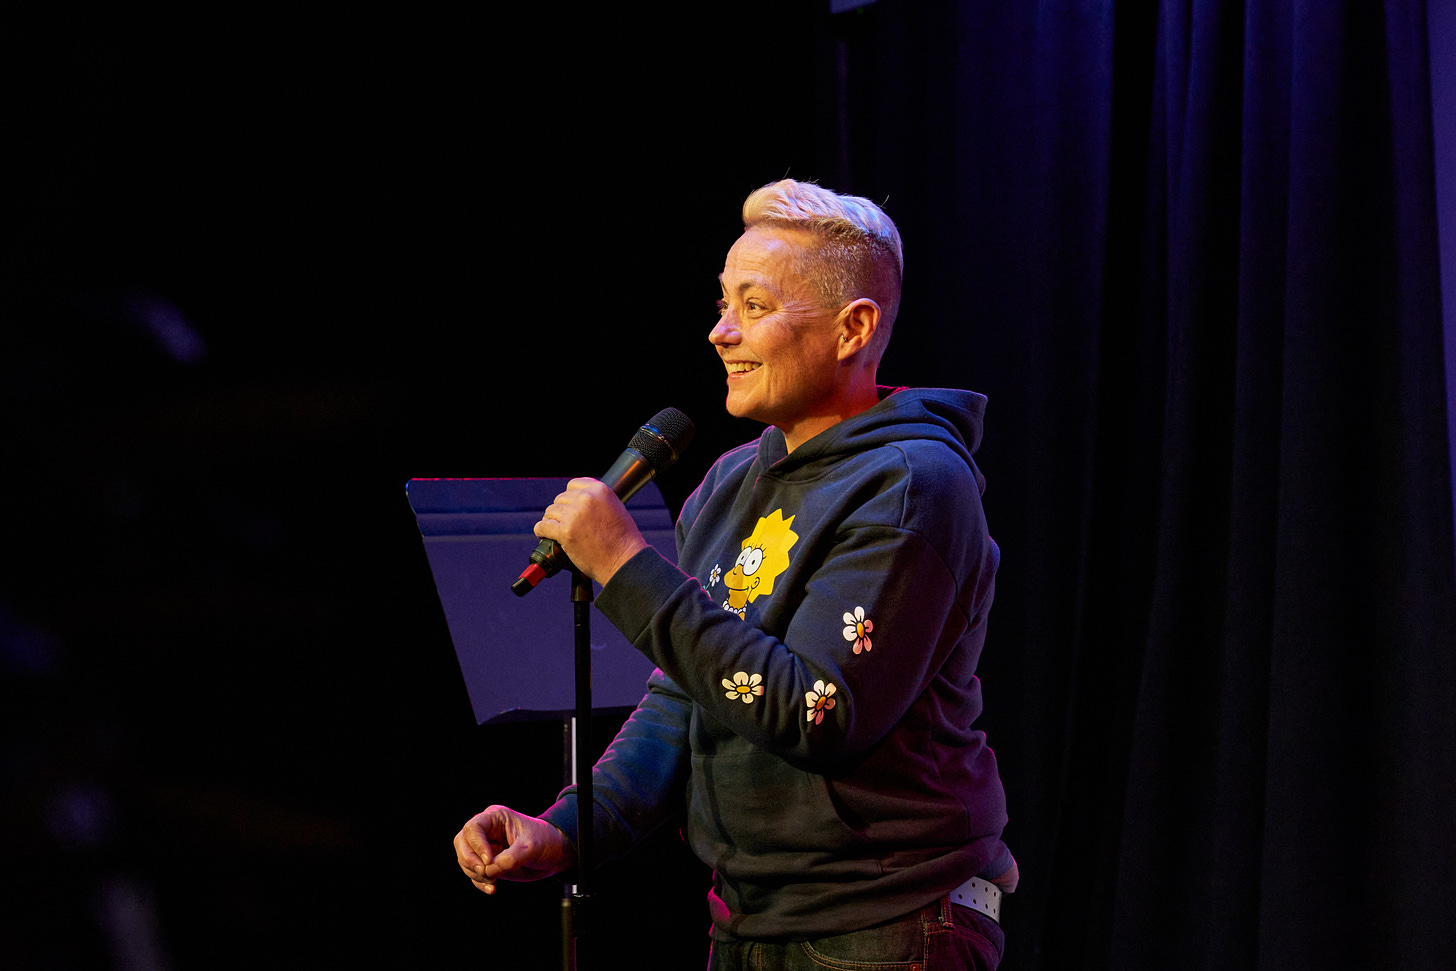 comedian kelli dunham performing onstage